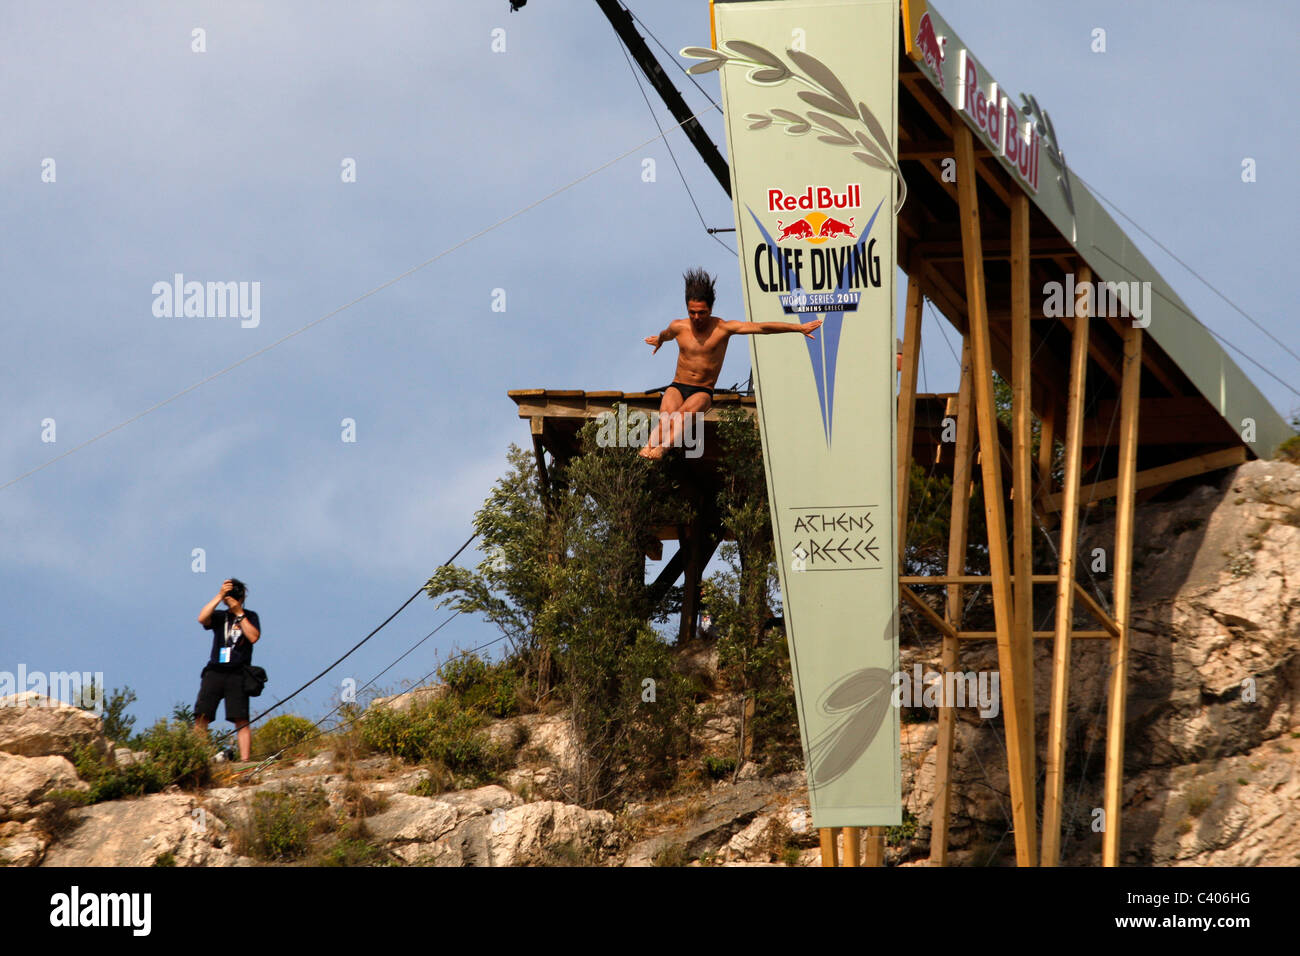 Red Bull Cliff diving at lake Vouliagmeni Athens Greece Stock Photo